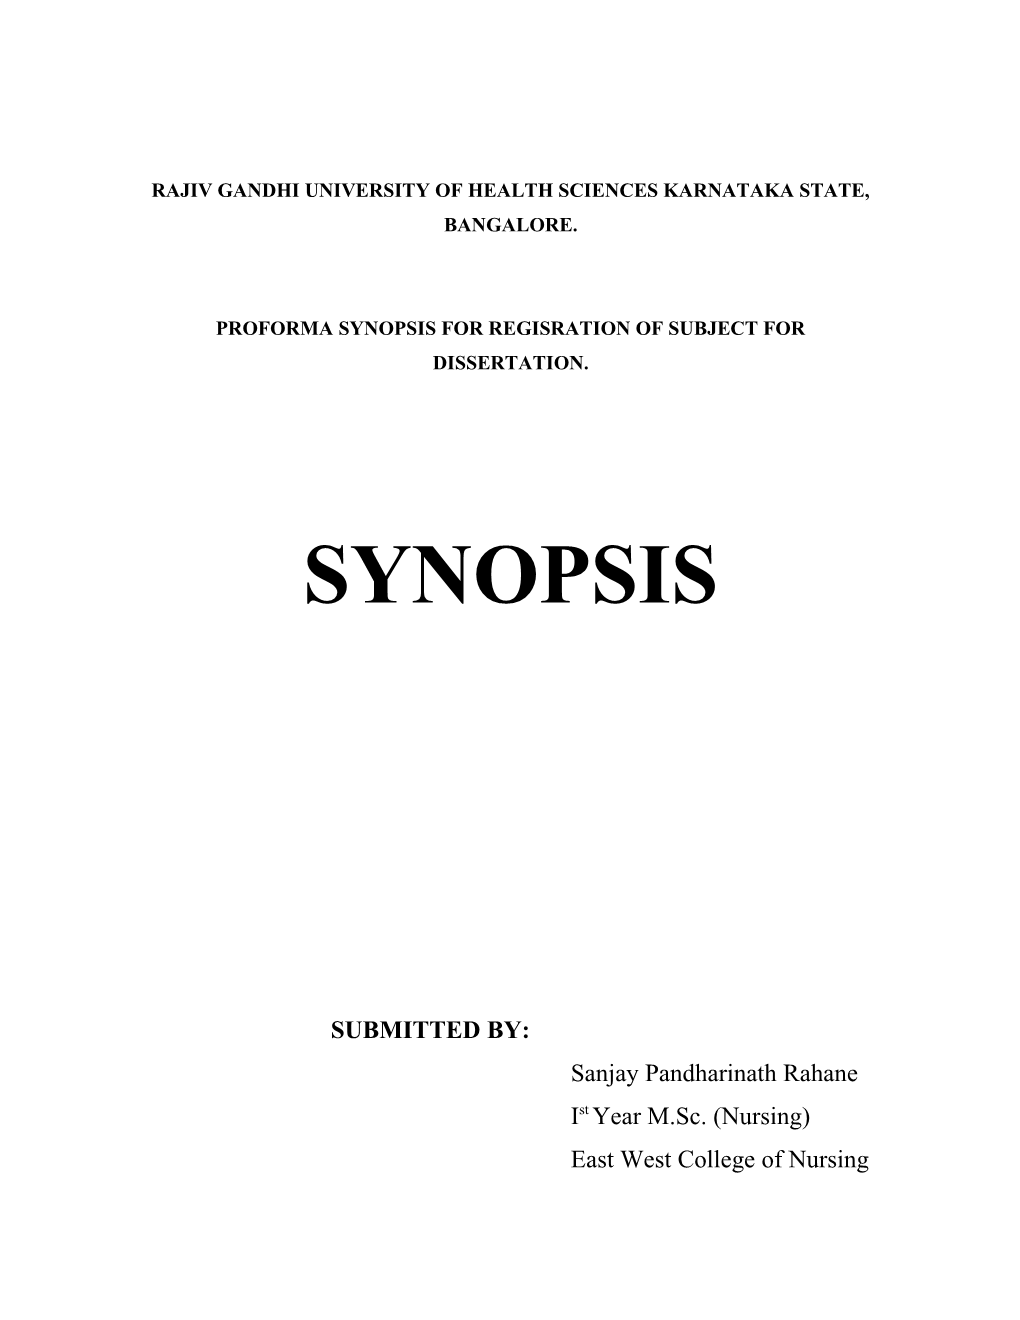 Proforma Synopsis for Regisration of Subject for Dissertation